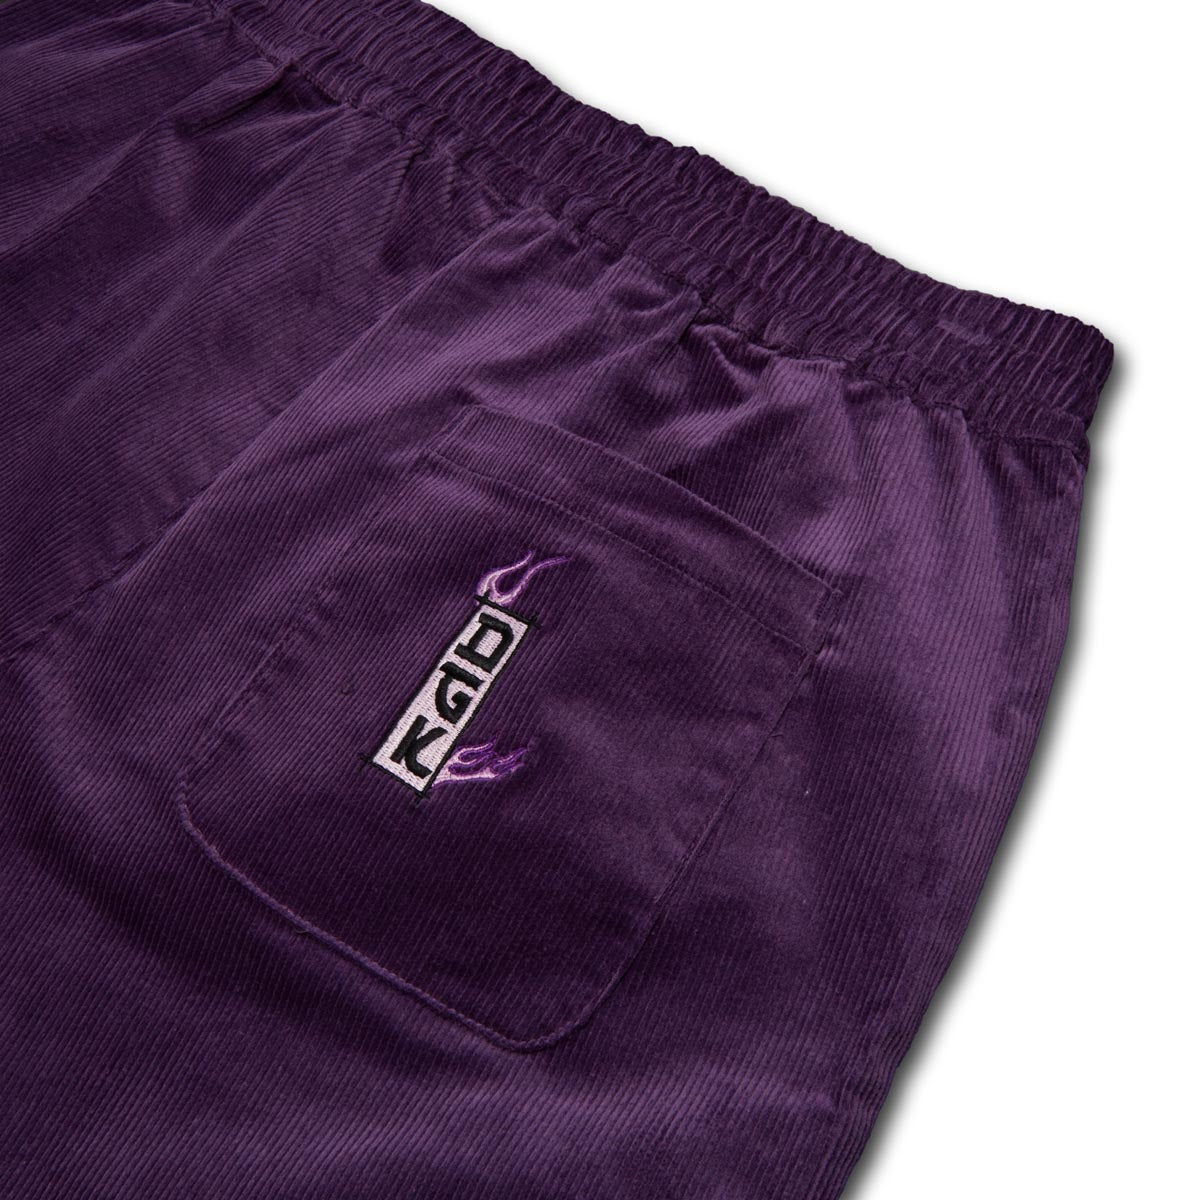 DGK Fire Blossom Shorts - Purple image 4